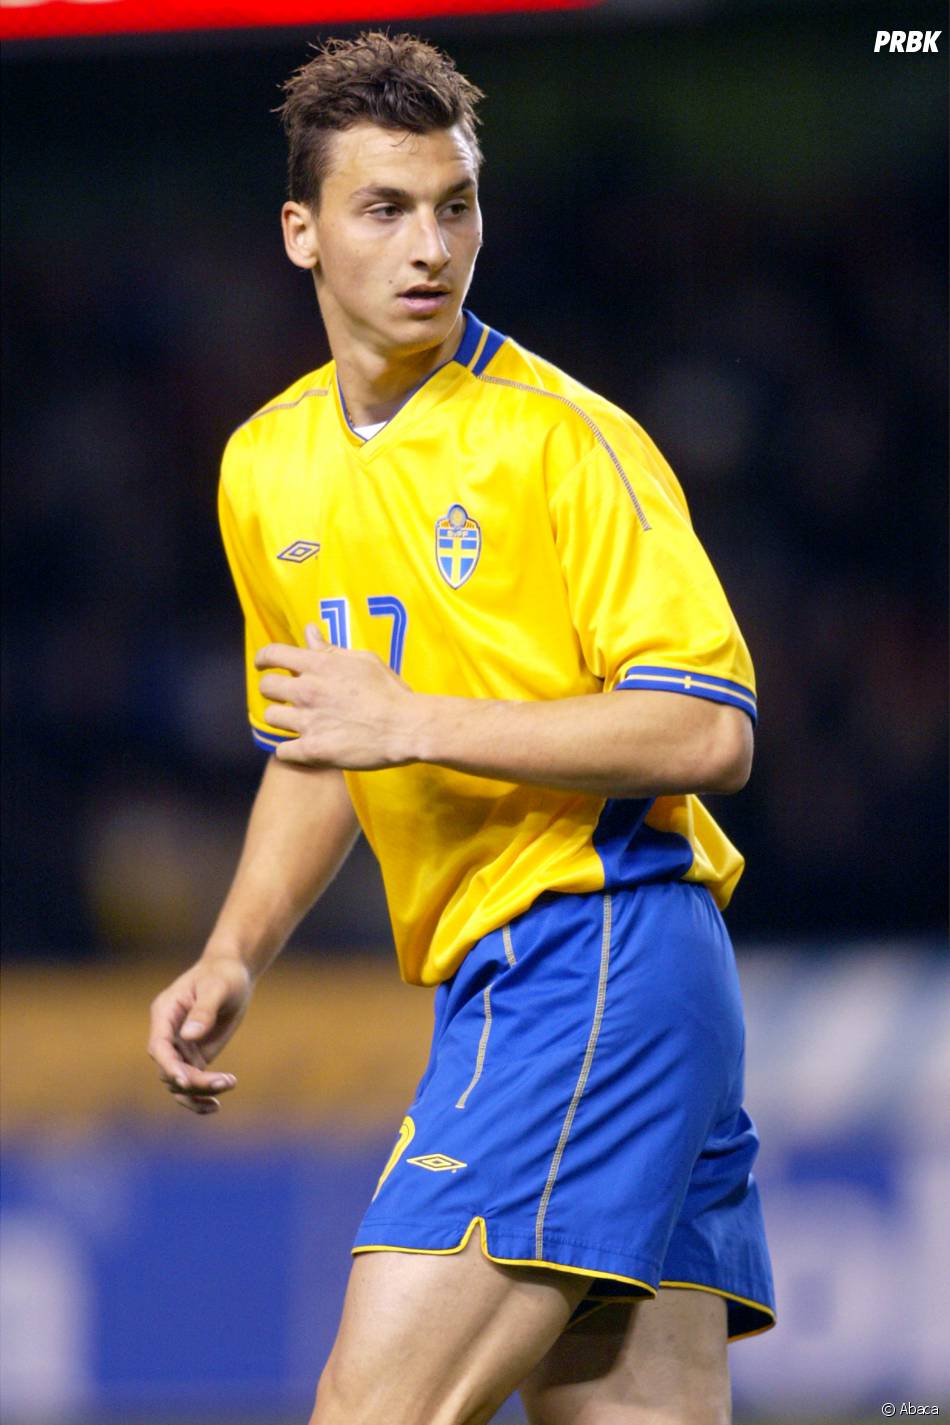  Zlatan Ibrahimovic 2003 